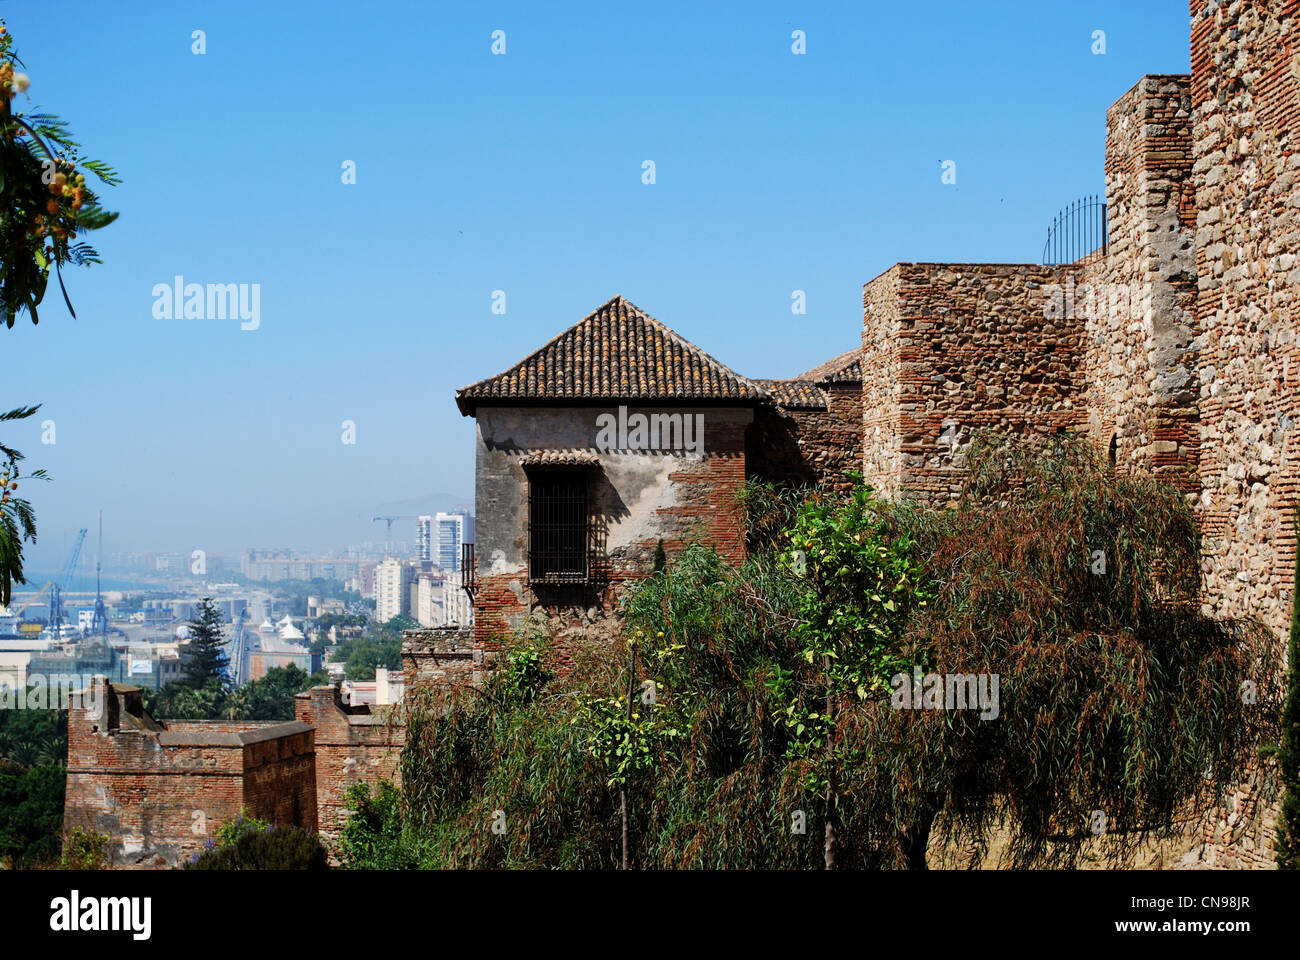 Upper walled precinct of the citadel viewed from the South, Alcazaba de Malaga, Malaga, Andalucia, Spain, Western Europe. Stock Photo